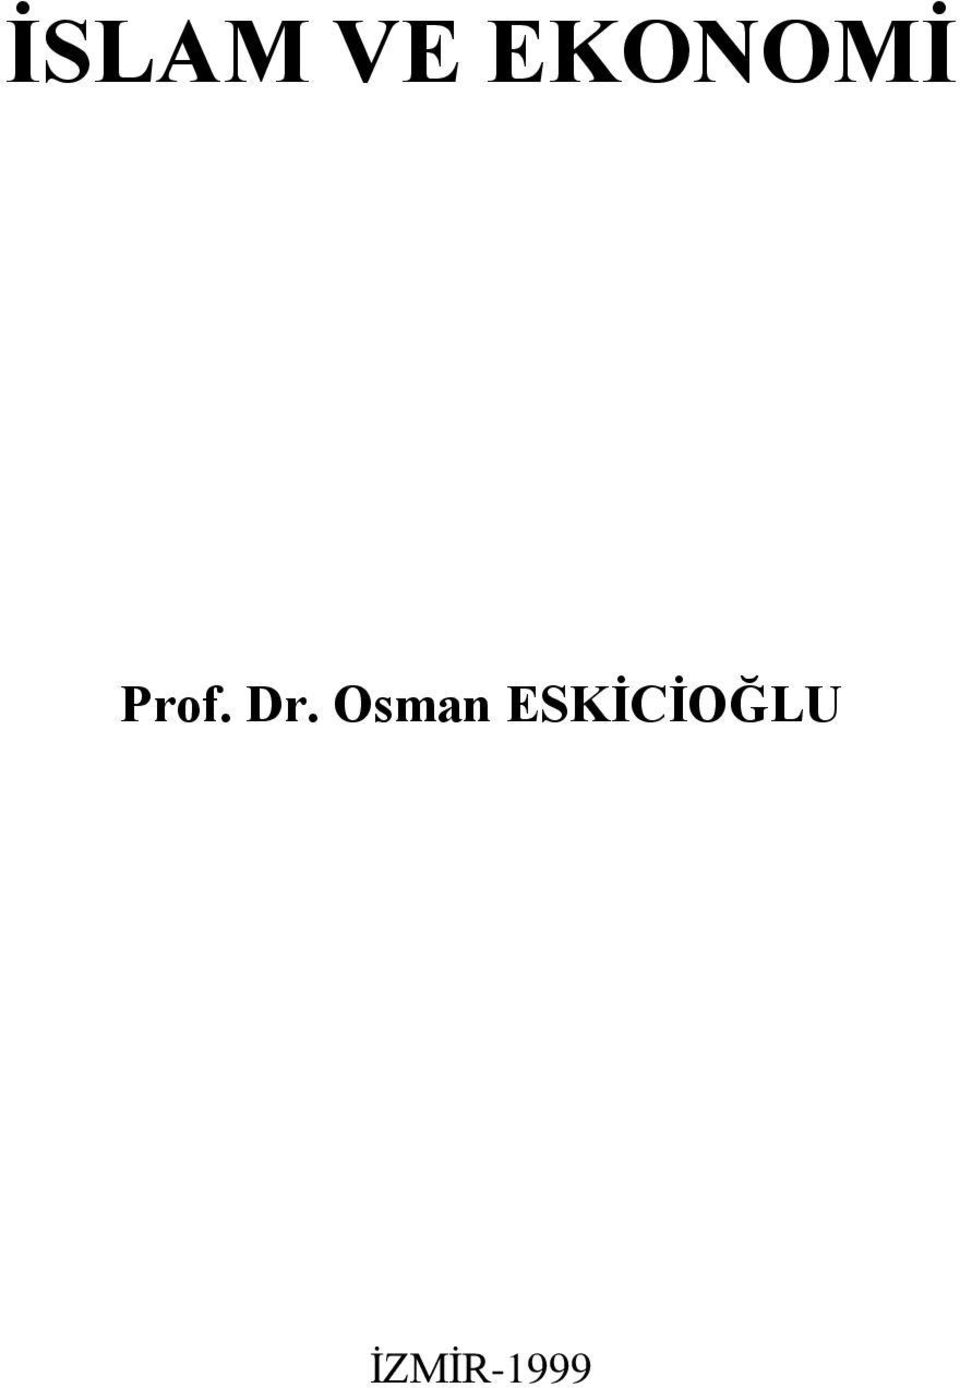 Dr. Osman